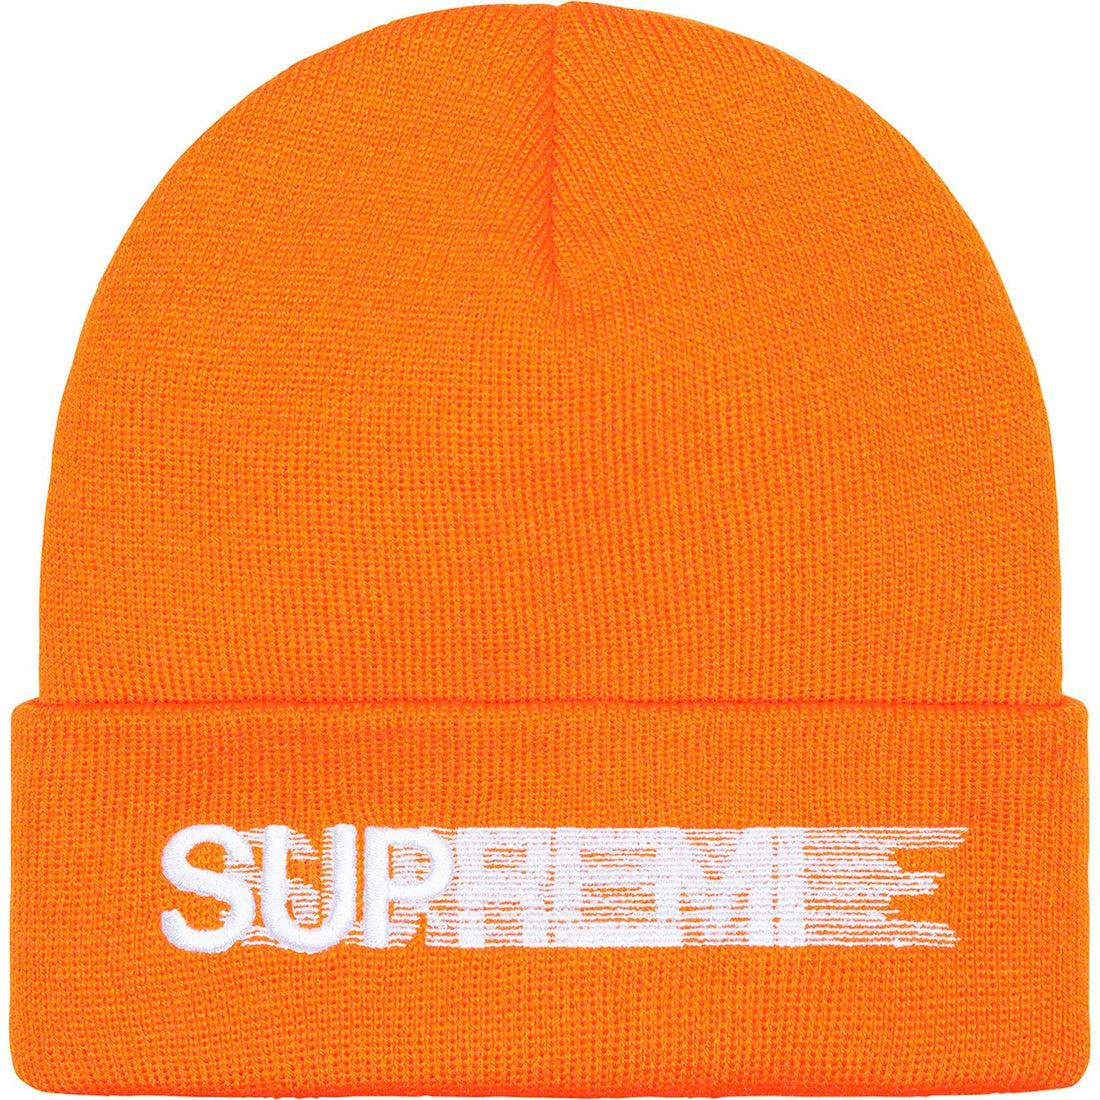 Supreme x New Era Box Logo Knitted Balaclava - Orange